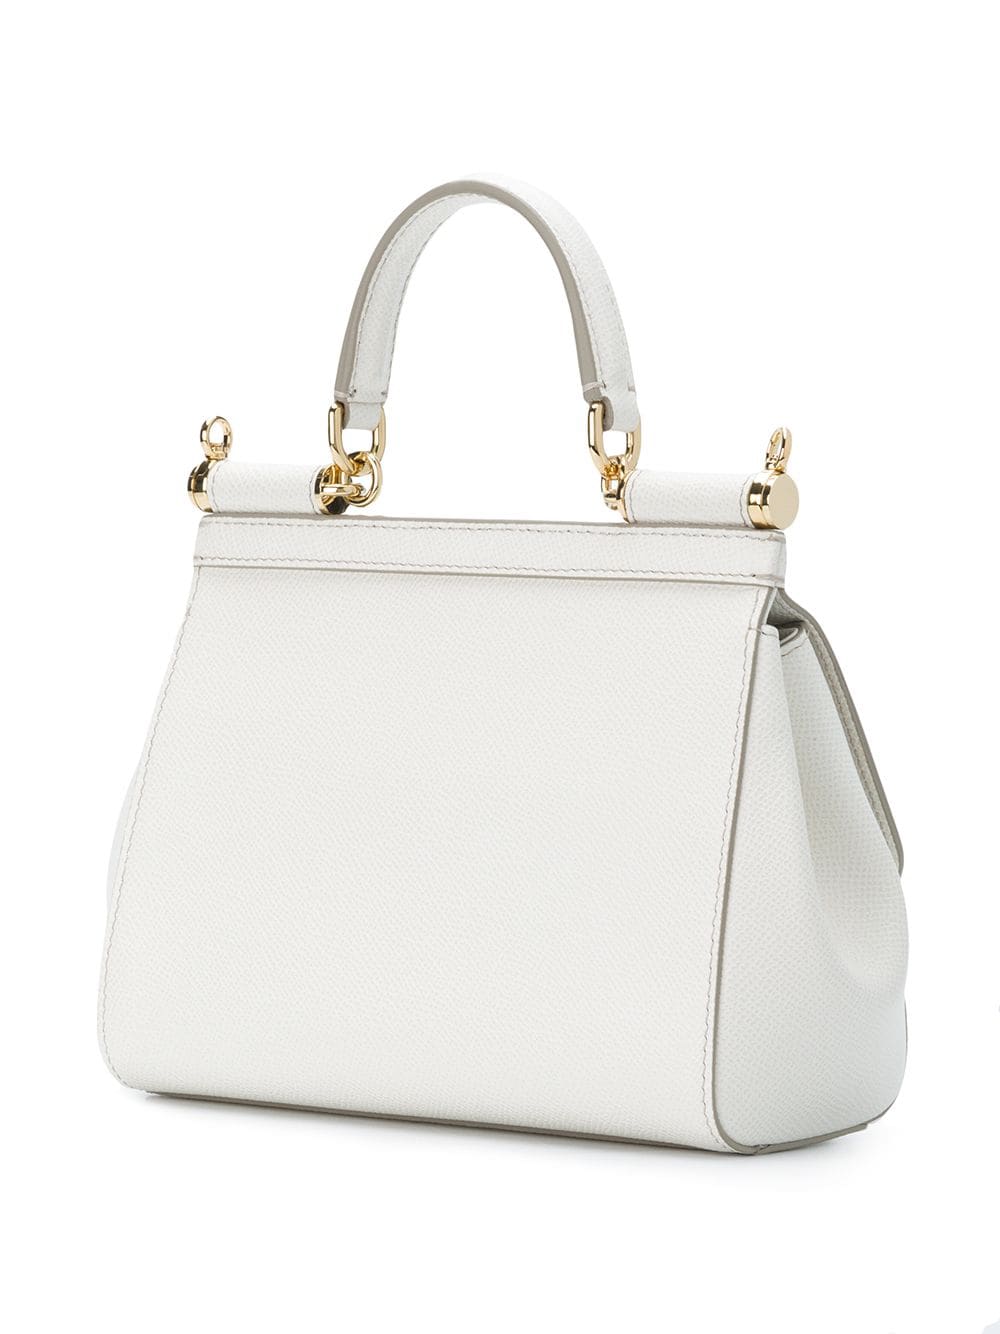 Dolce & Gabbana Sicily Small Shoulder Bag - White